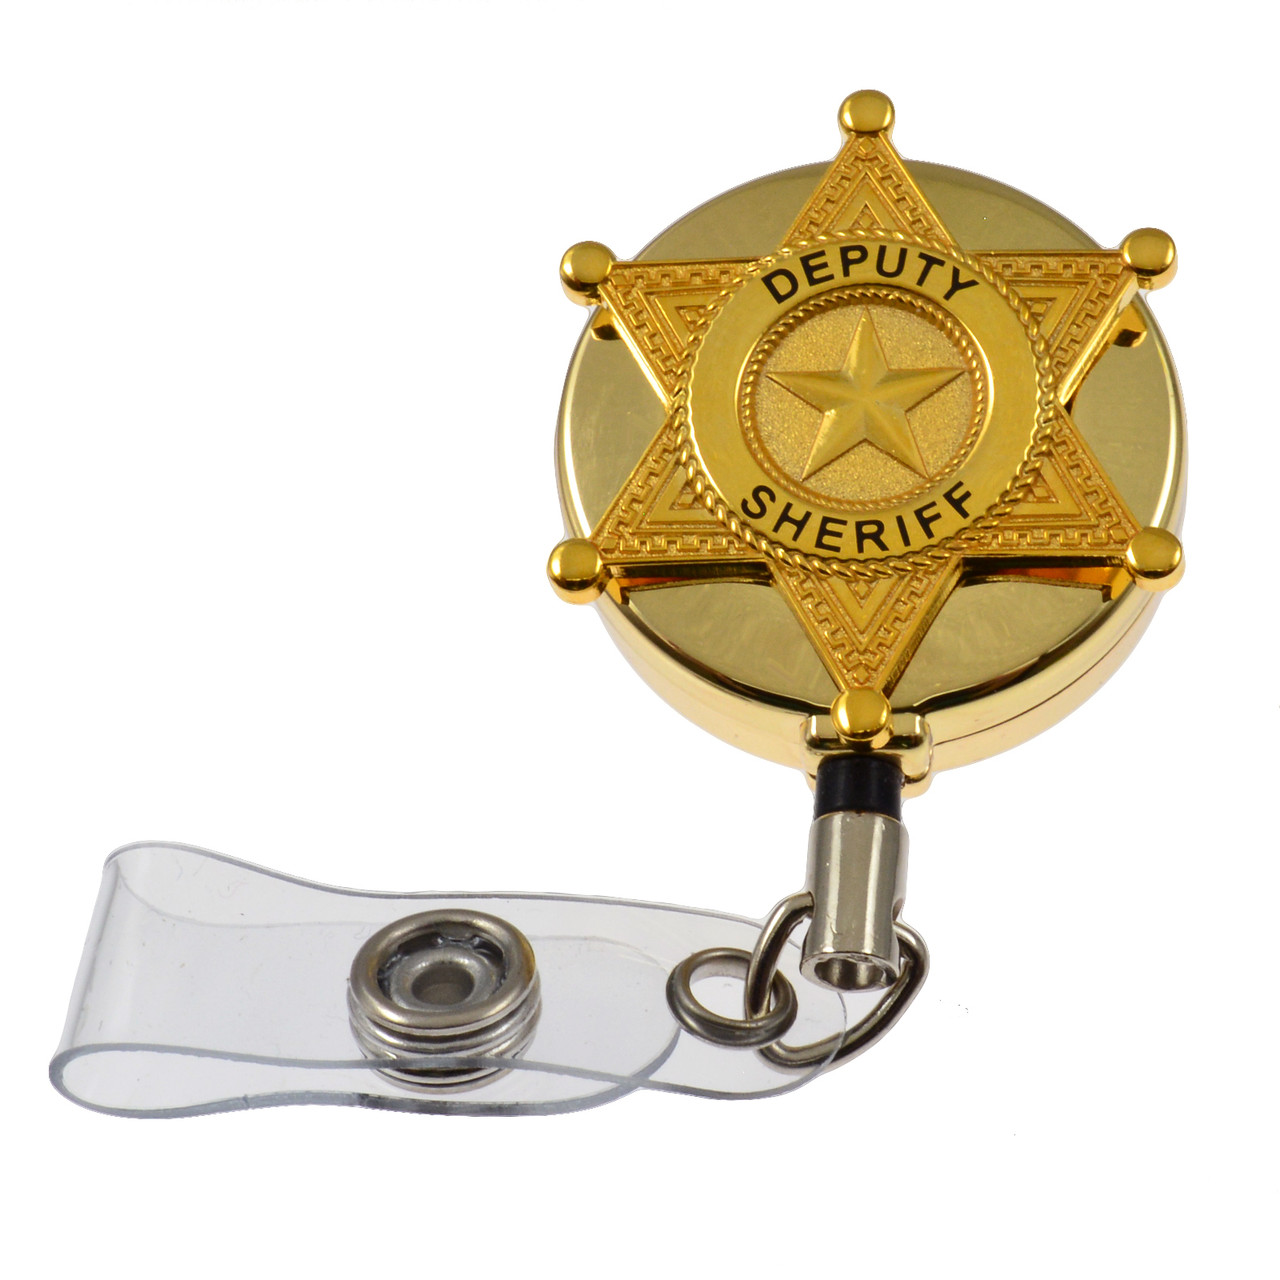 Deputy Sheriff Badge Retractable ID Card Holder, Sheriff Badge Reel